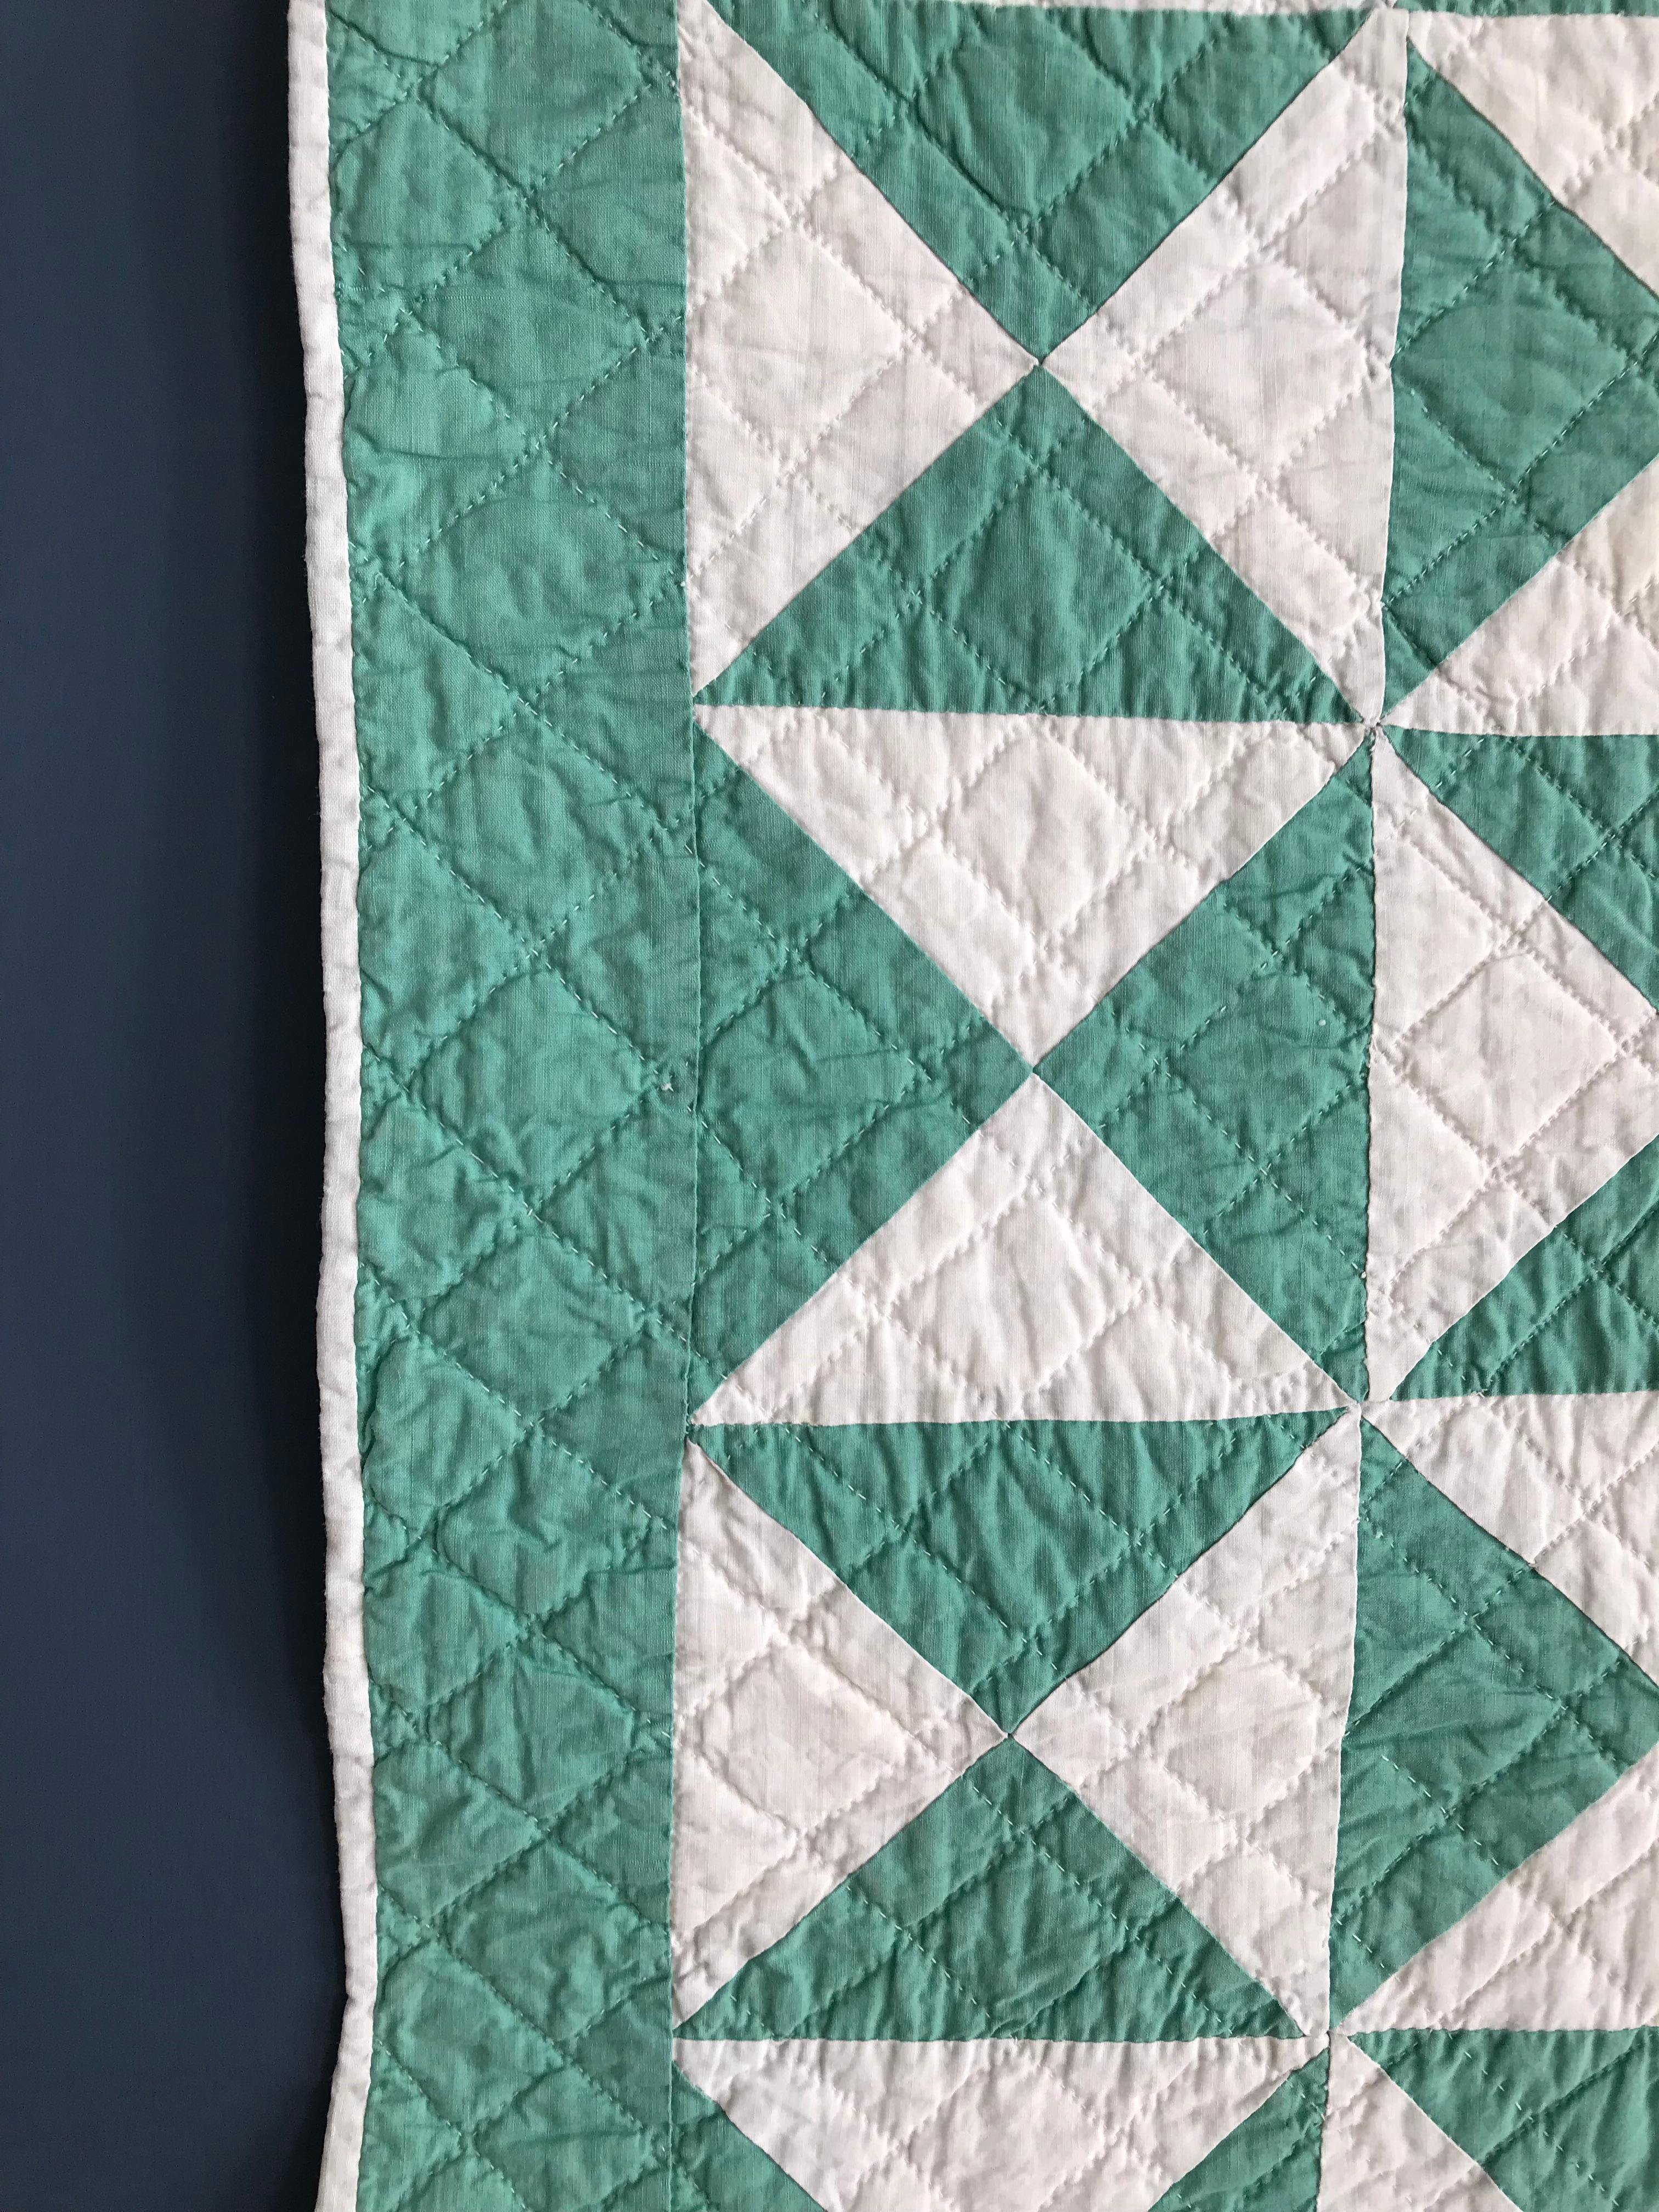 American Green Vintage Patchwork Quilt